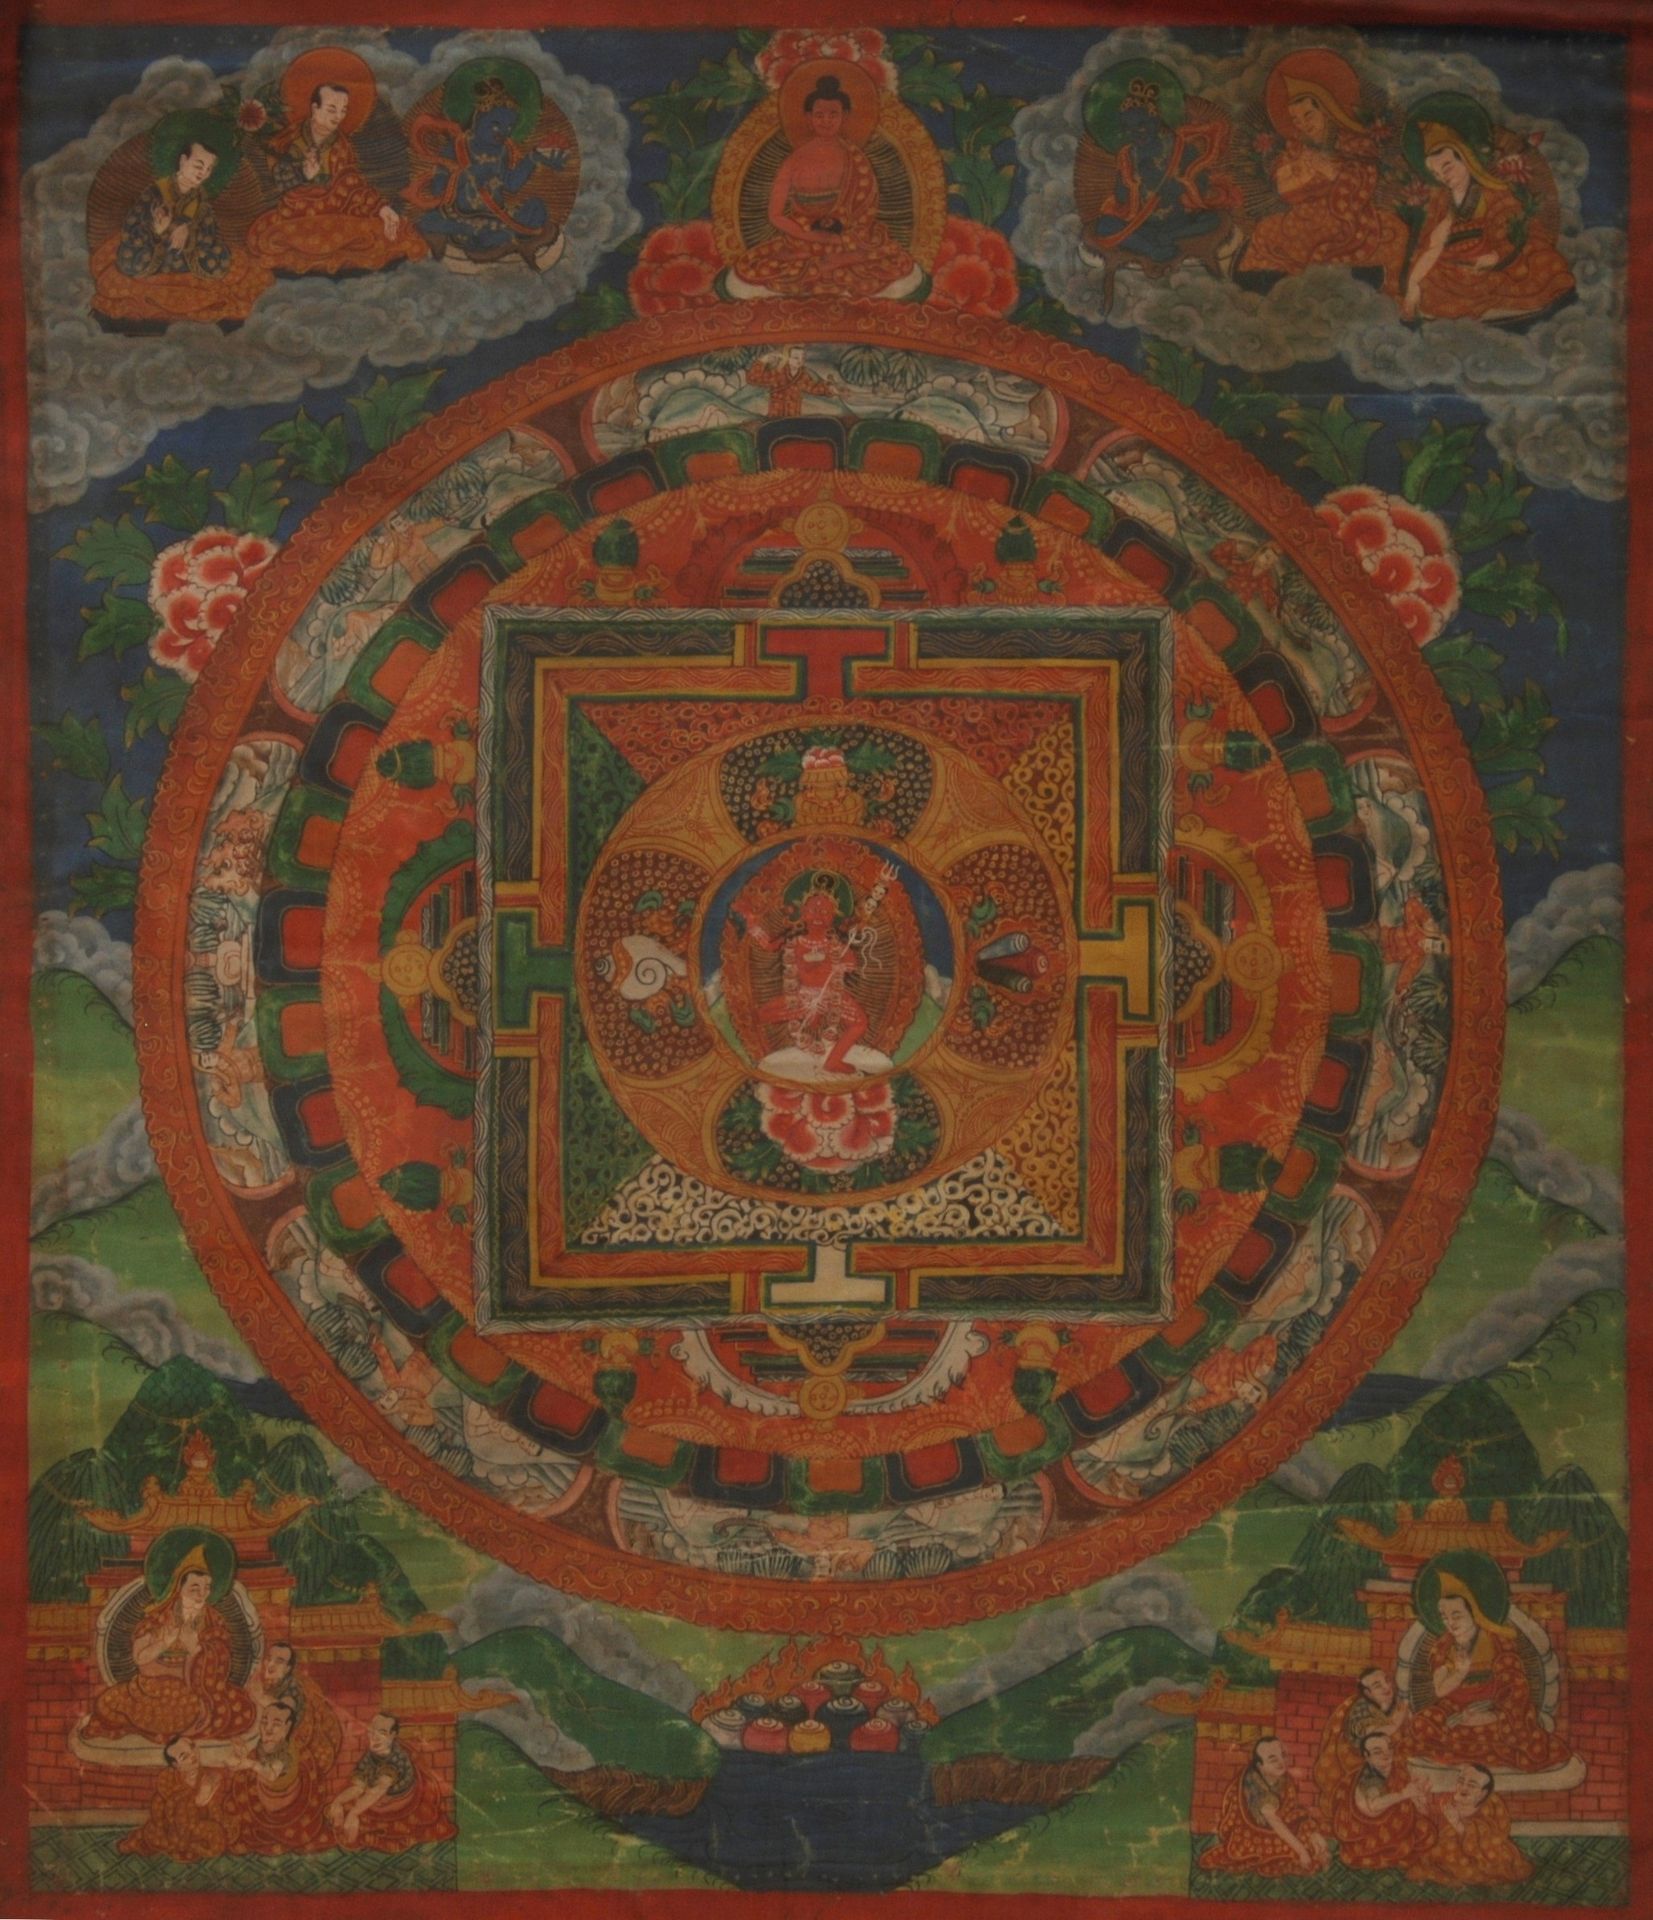 Thangka tibetana Tibetisches Thangka
Maße: cm 40x48